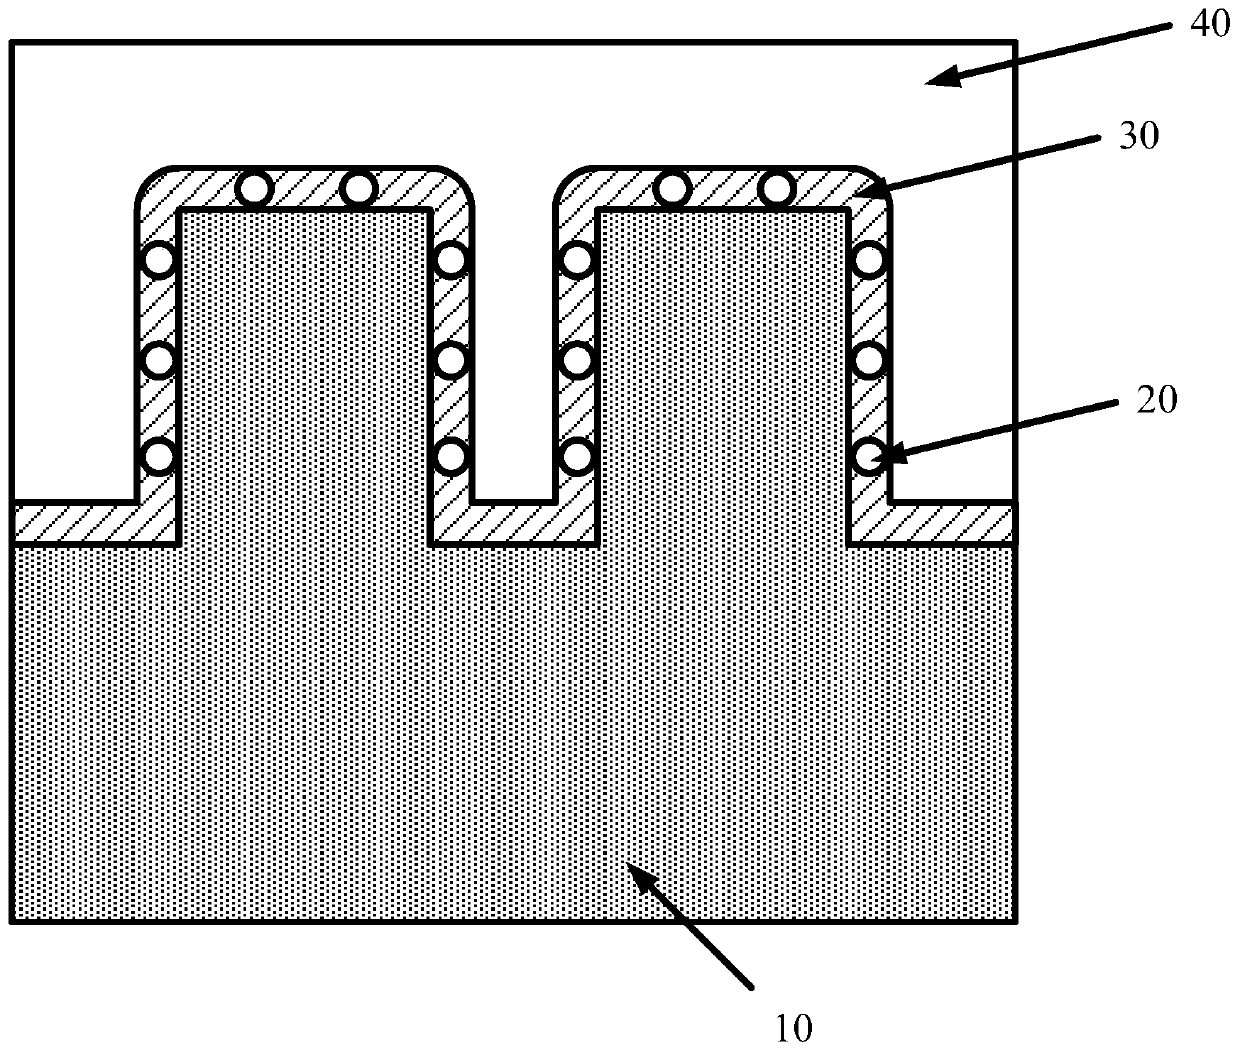 Carbon nanotube three-dimensional fin transistor and preparation method thereof